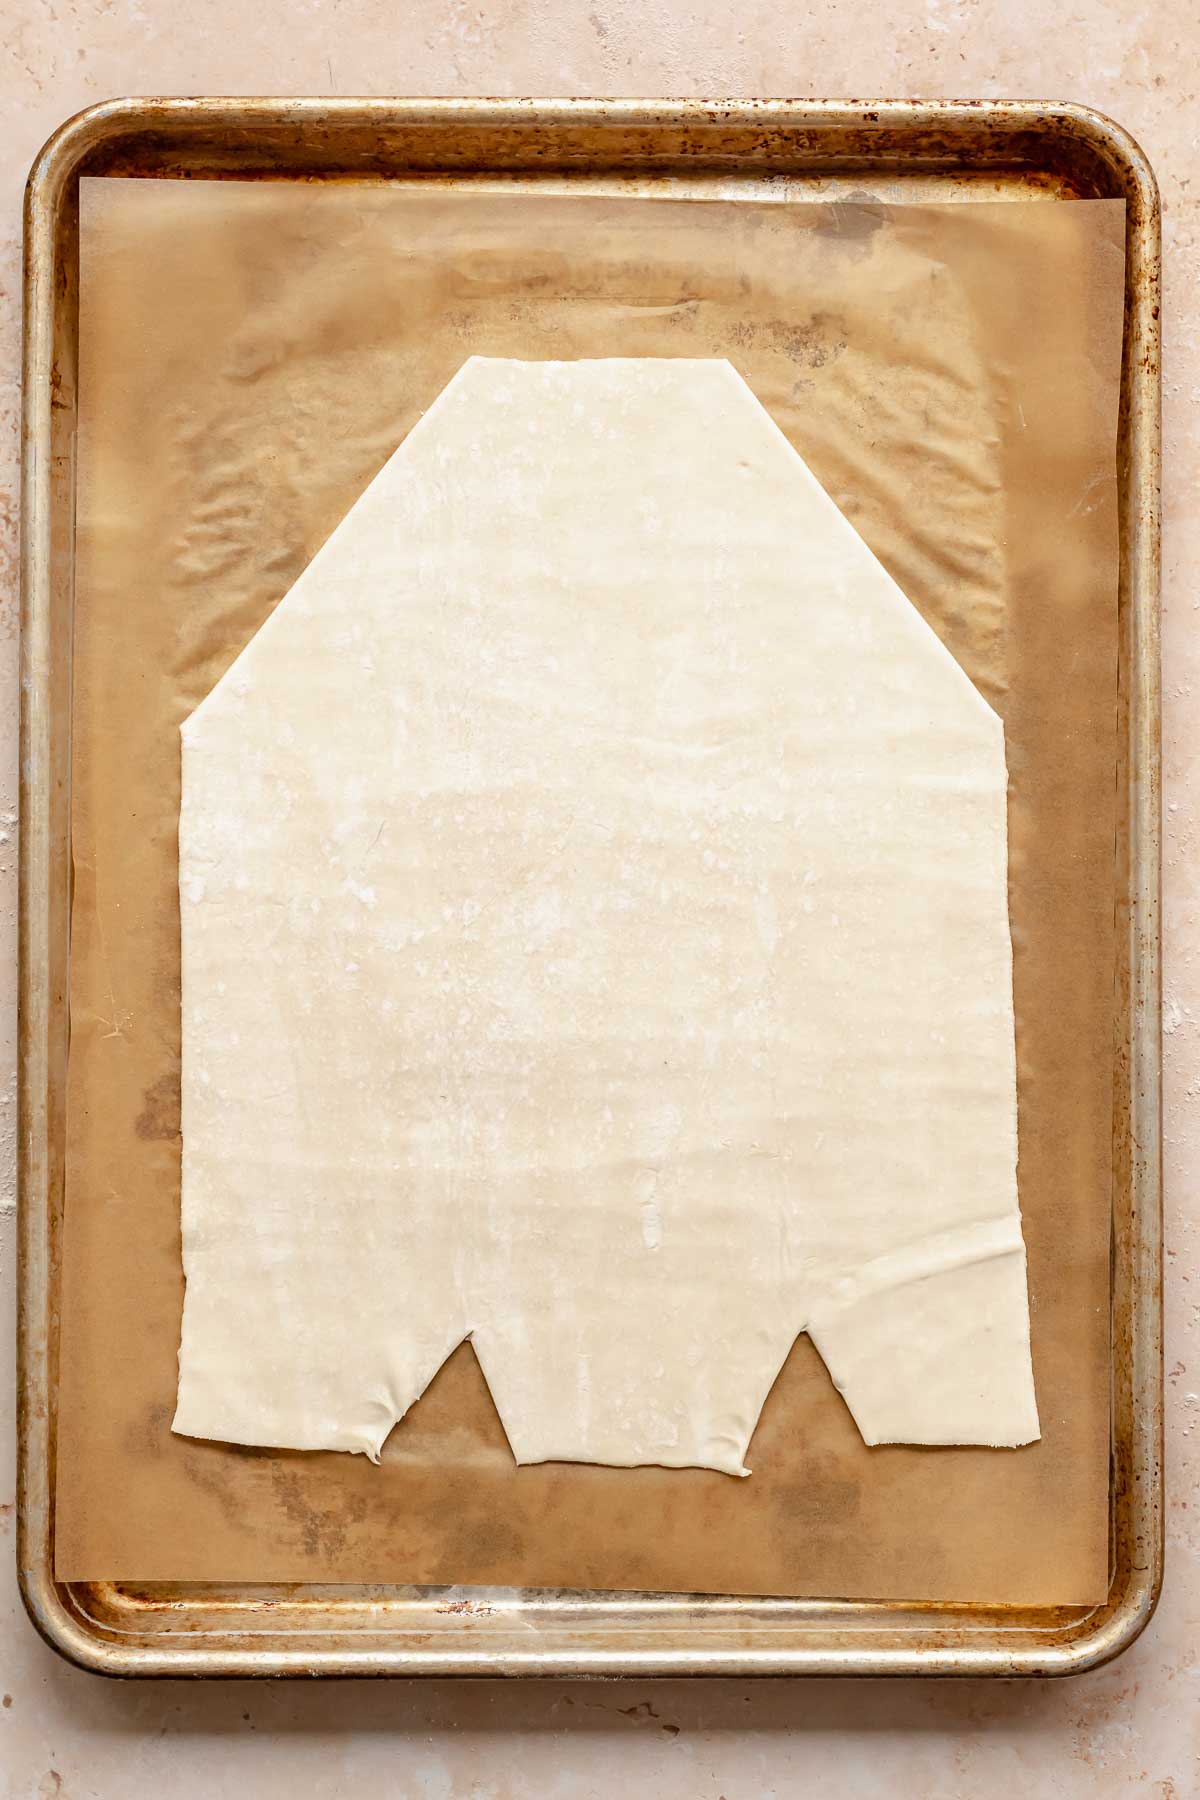 A cut a prepared danish base on a cookie sheet.